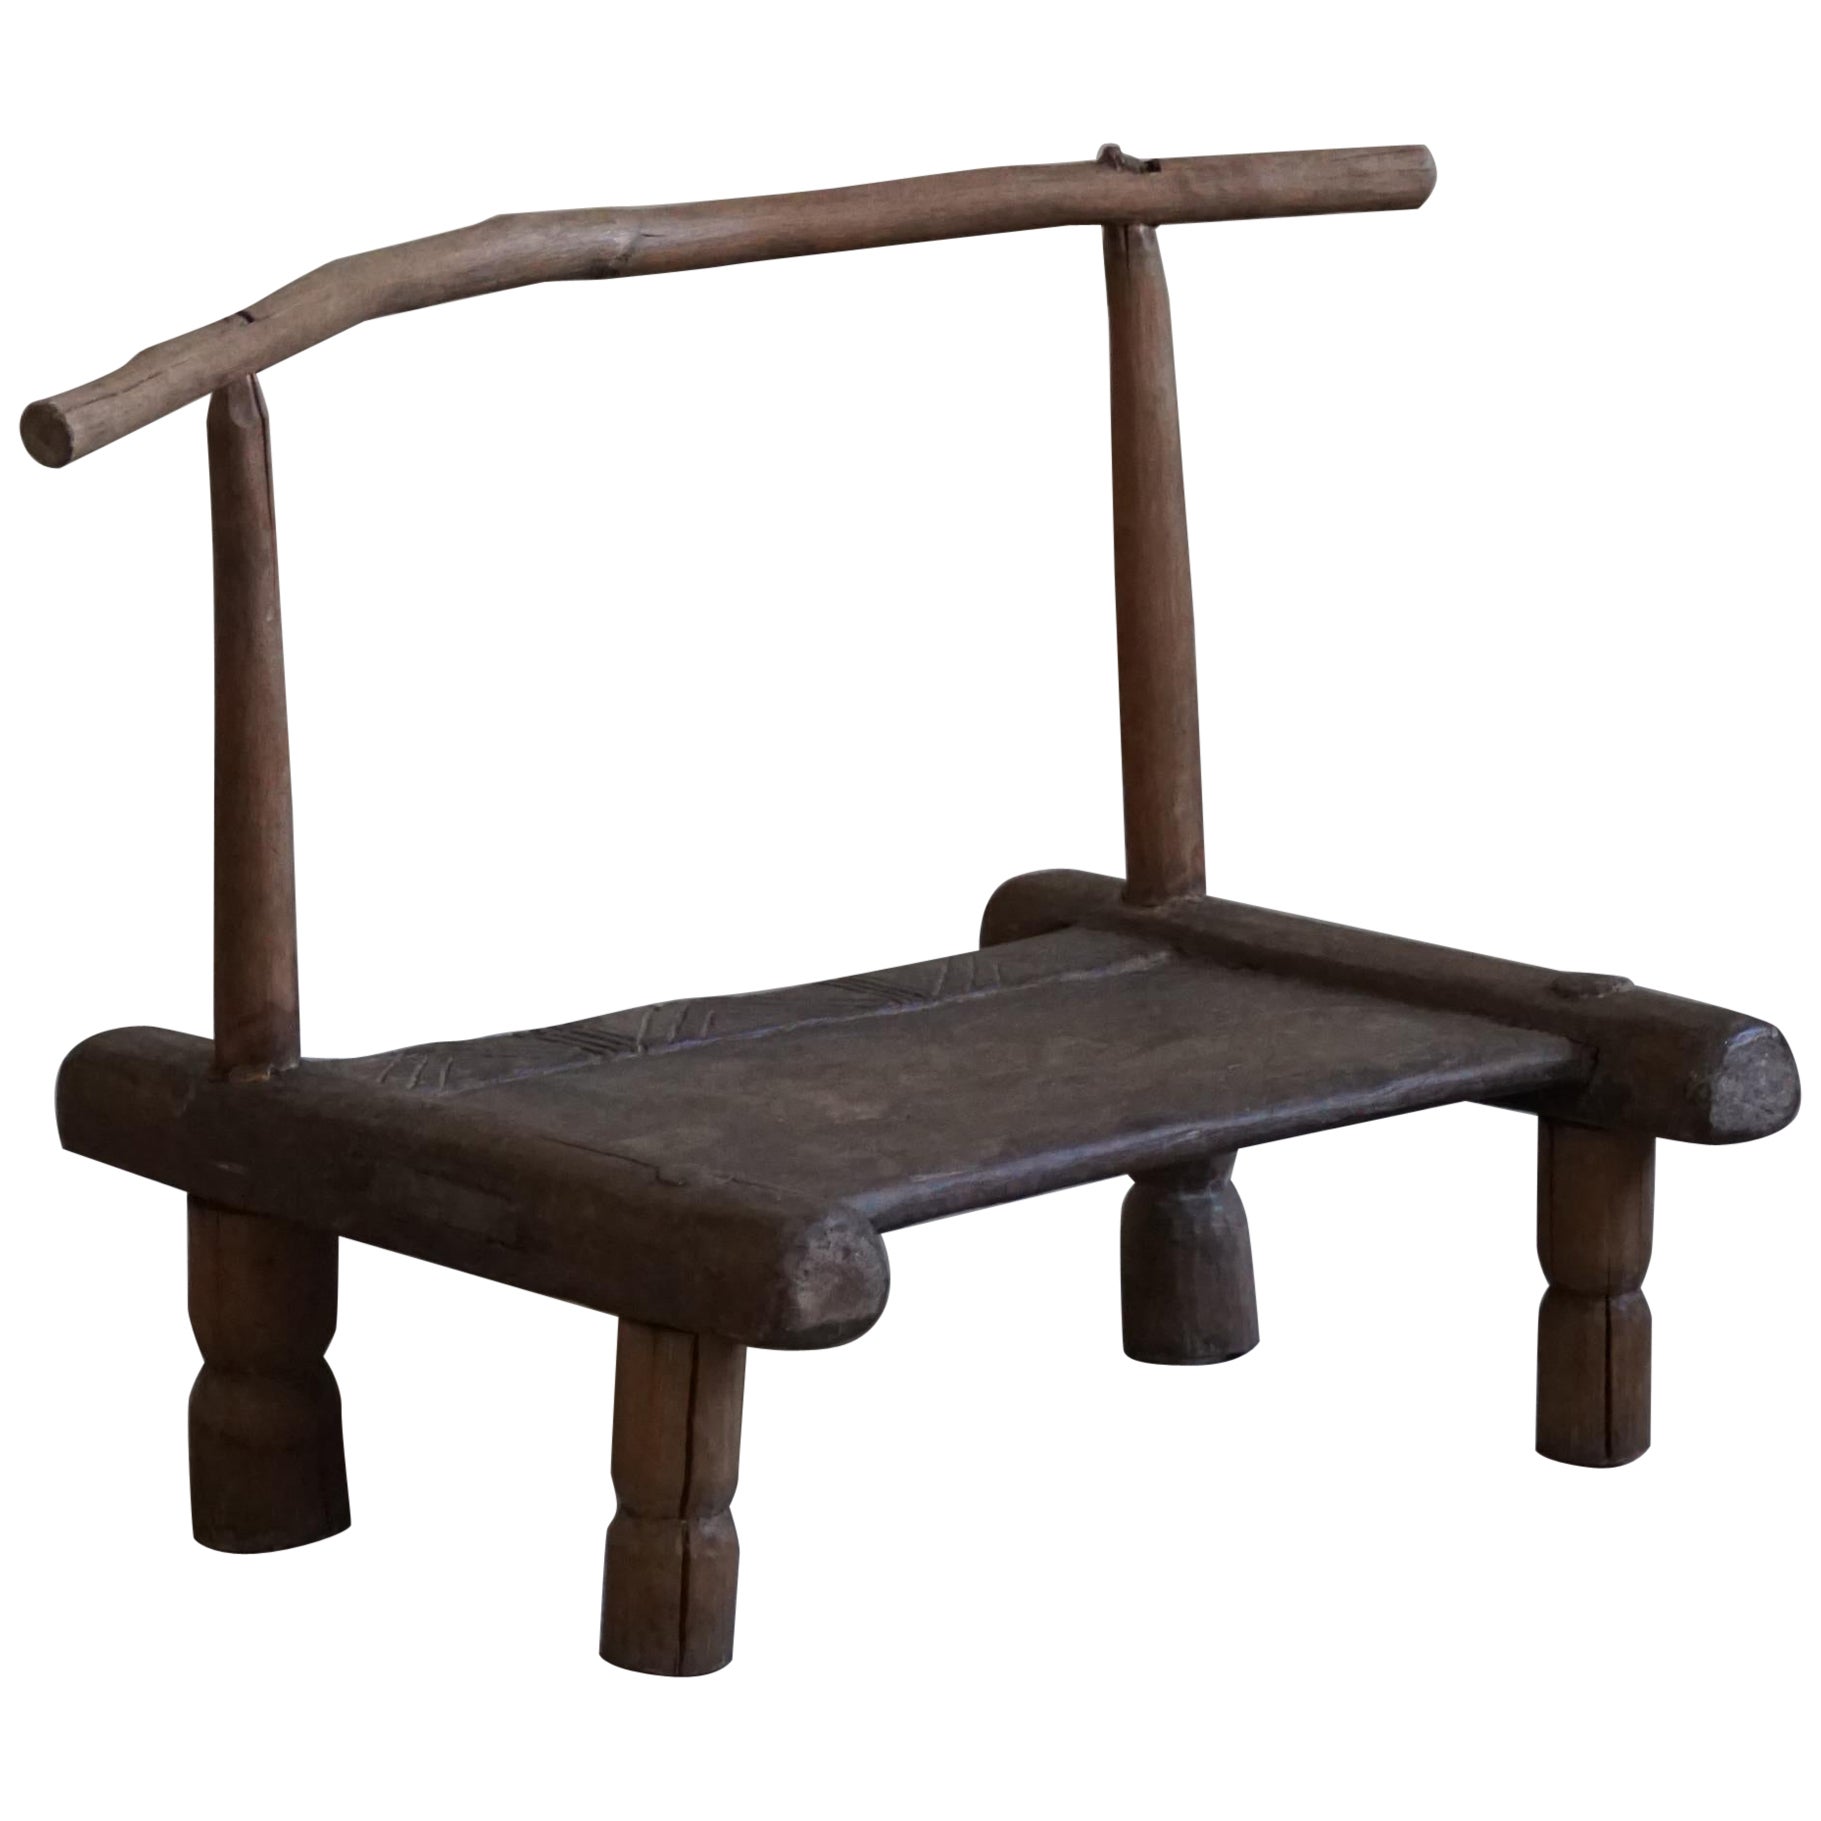 Tabouret / chaise Wabi Sabi africain ancien, Objects for Objects, début du 20e siècle